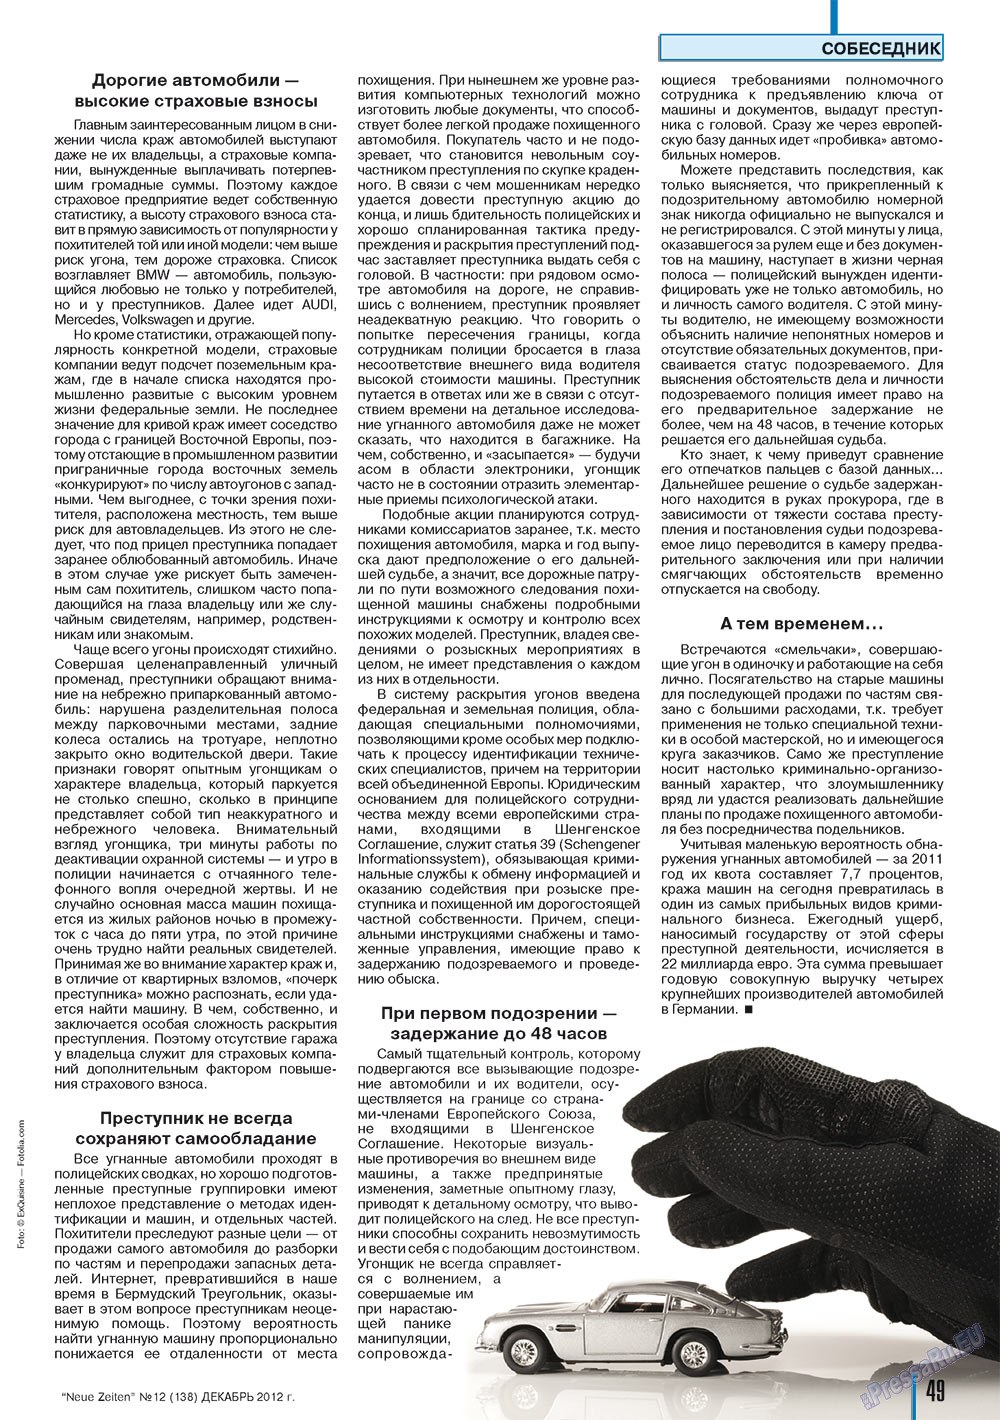 Neue Zeiten (журнал). 2012 год, номер 12, стр. 49